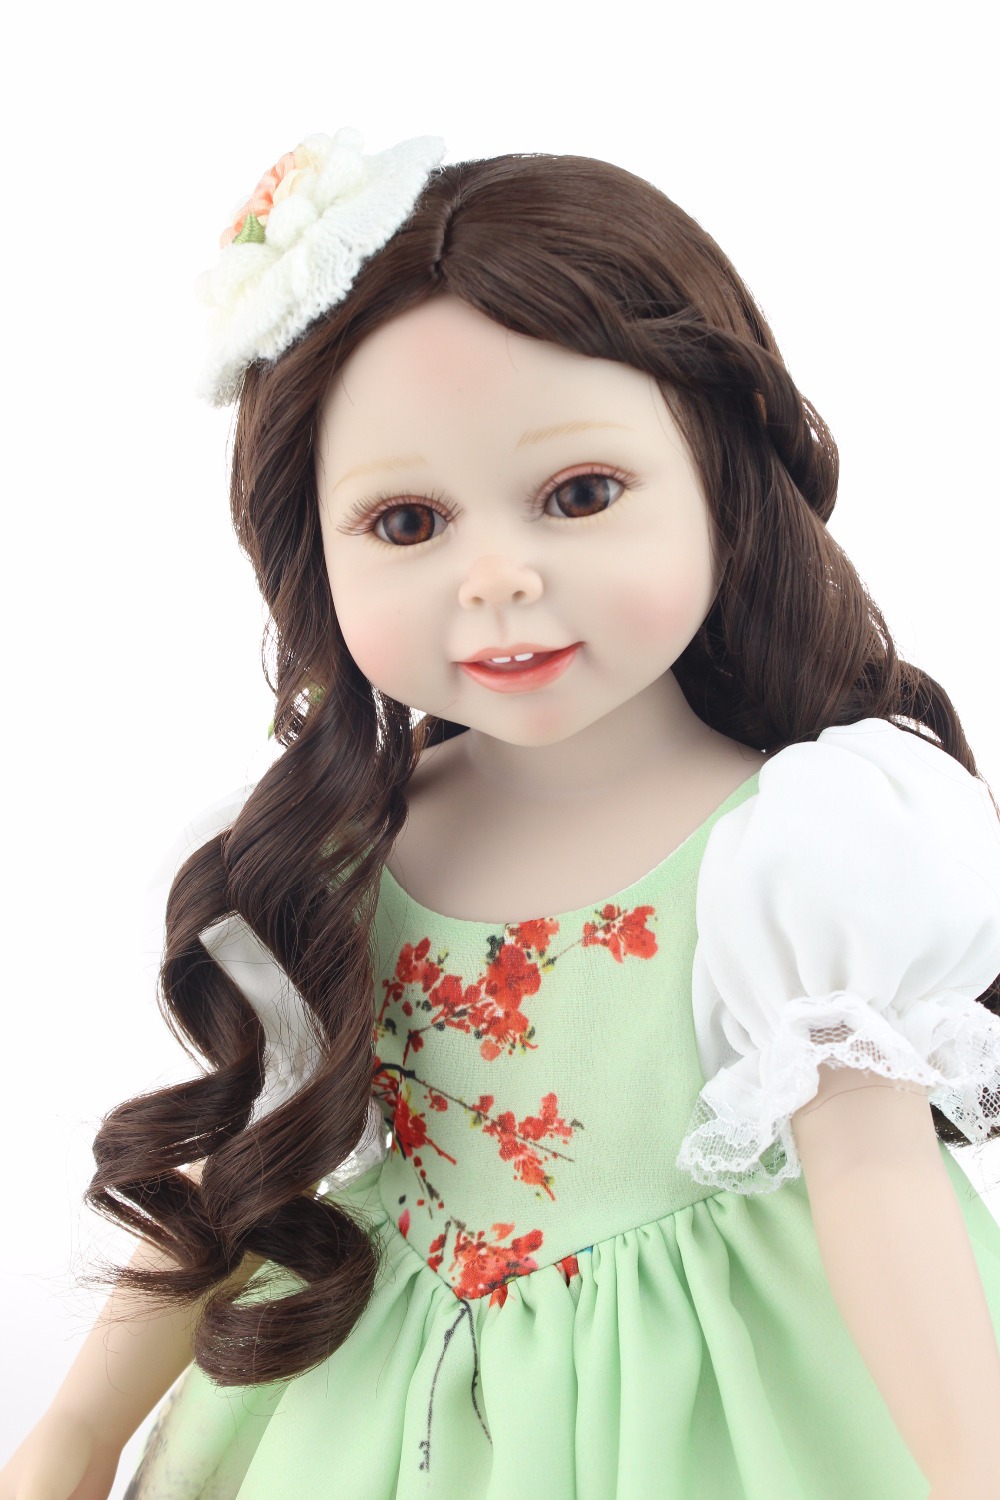 ... New Full Vinyl 18 inches Baby doll Princess Dress Girls DIY reborn Doll Dream Cartoon Series - New-Full-Vinyl-18-inches-Baby-doll-Princess-Dress-Girls-DIY-reborn-Doll-Dream-Cartoon-Series